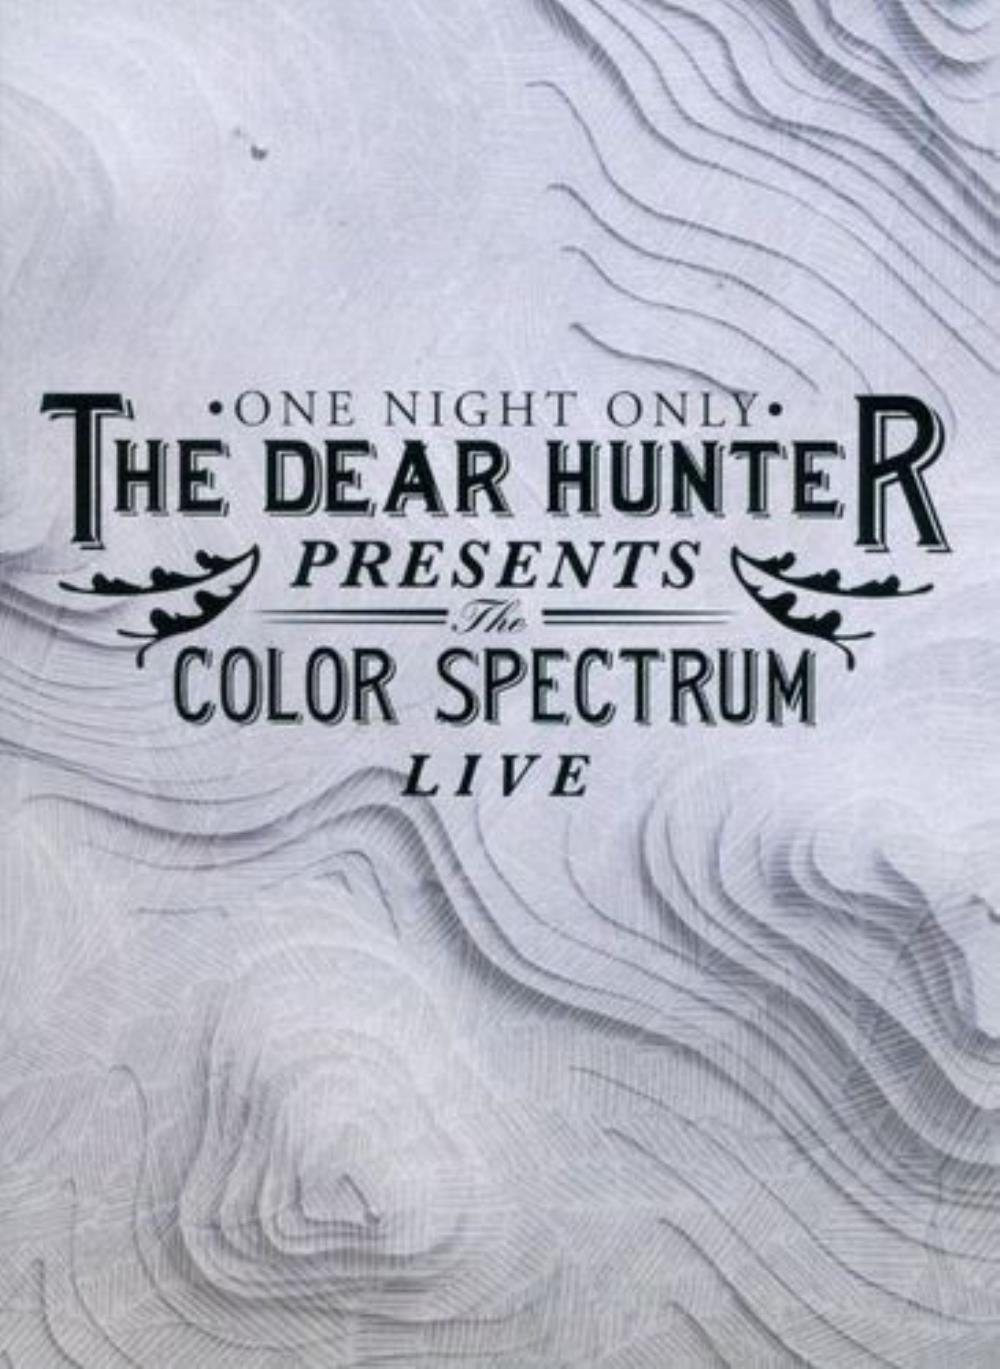 The Dear Hunter The Color Spectrum Live album cover